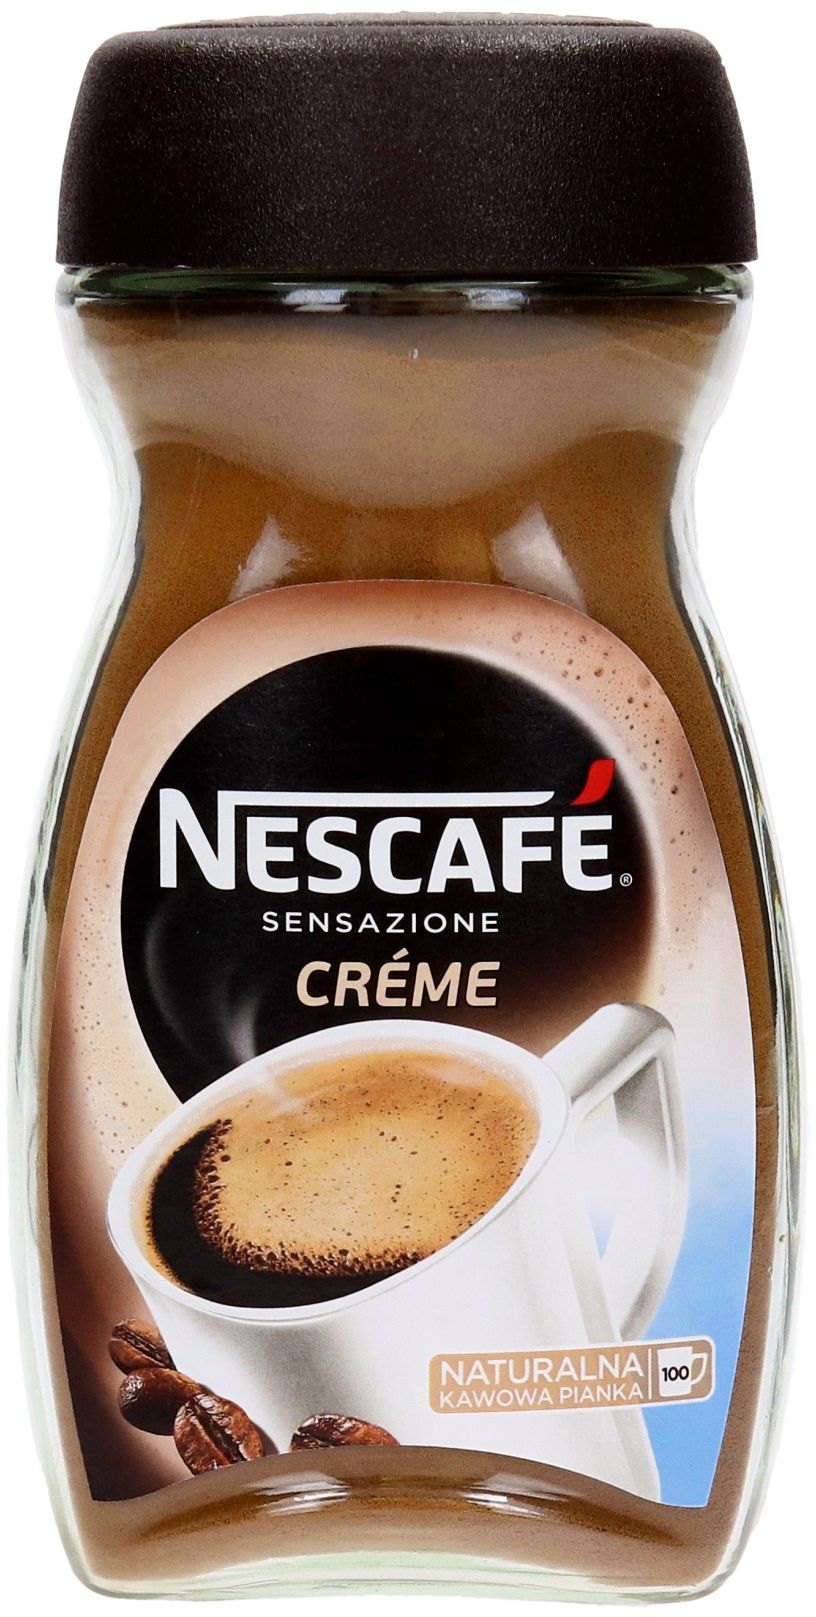 Nescafe Creme